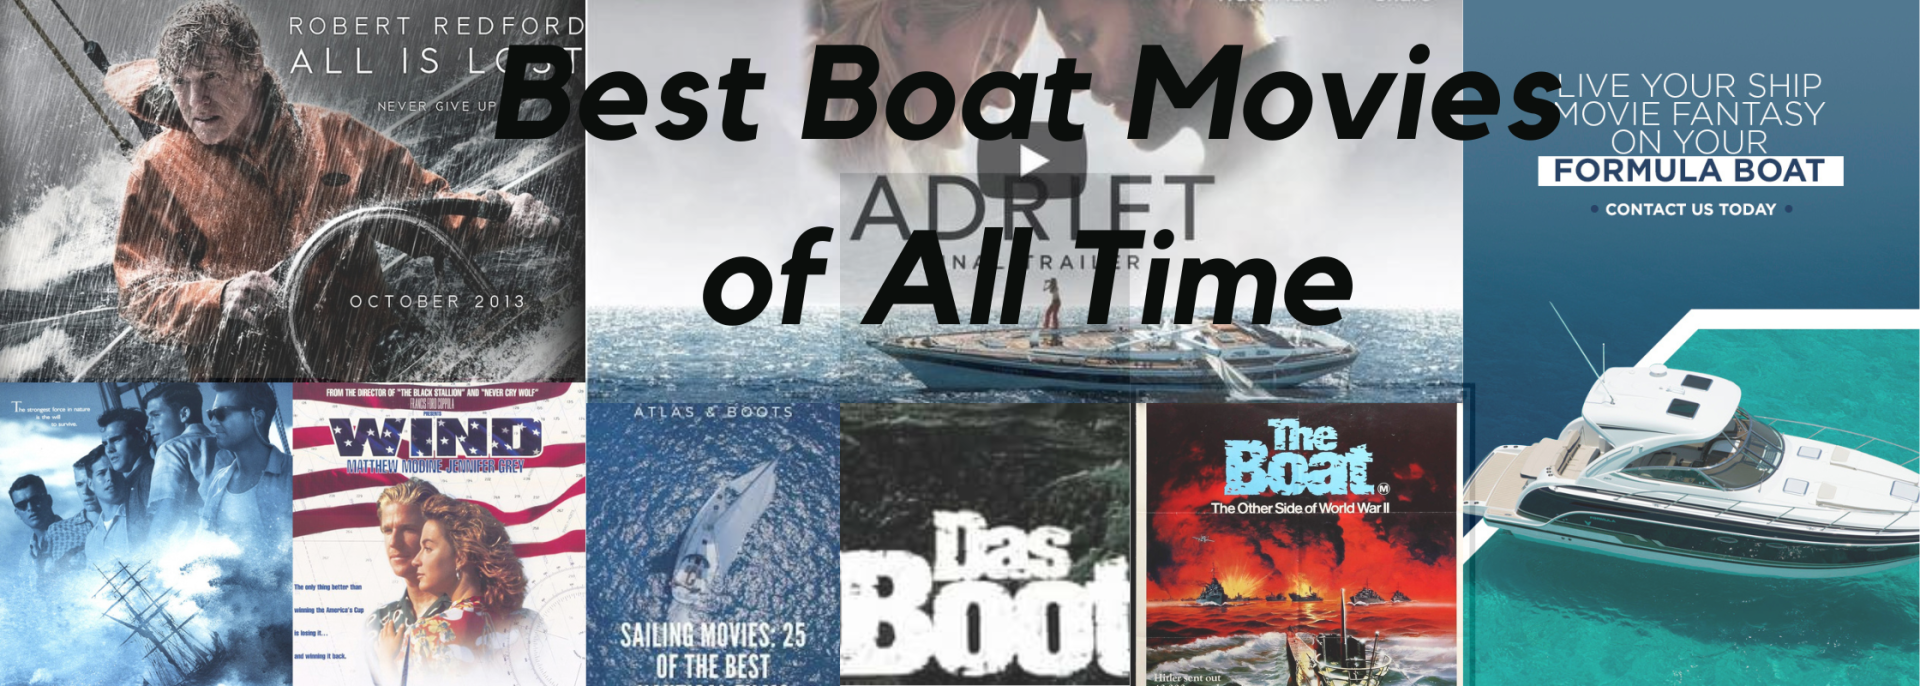 Boat Movies